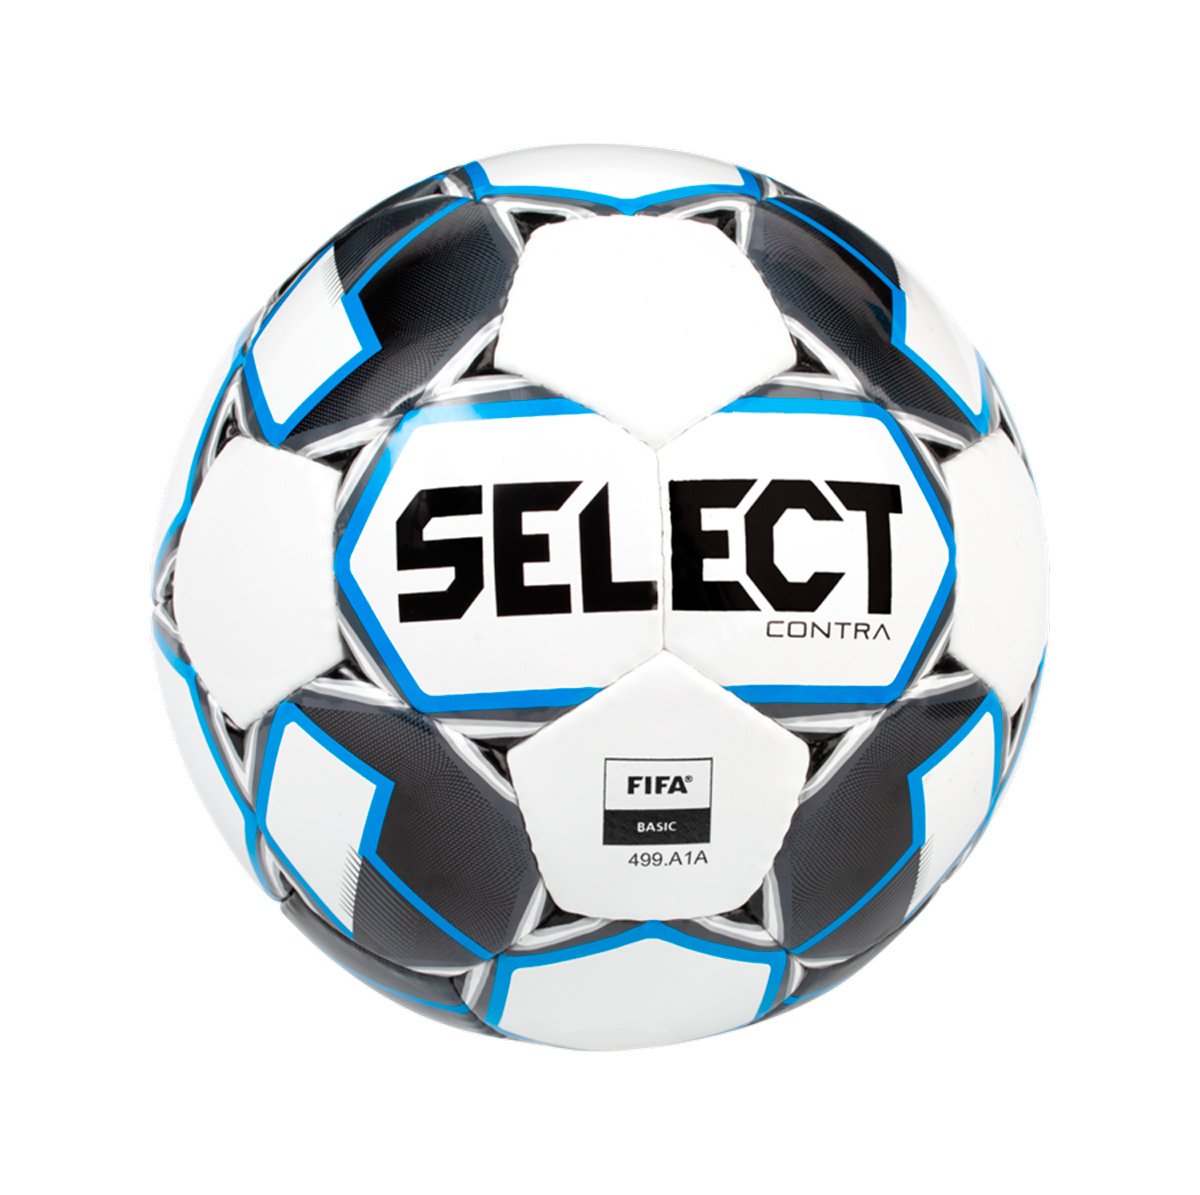 Select Contra Fodbold thumbnail